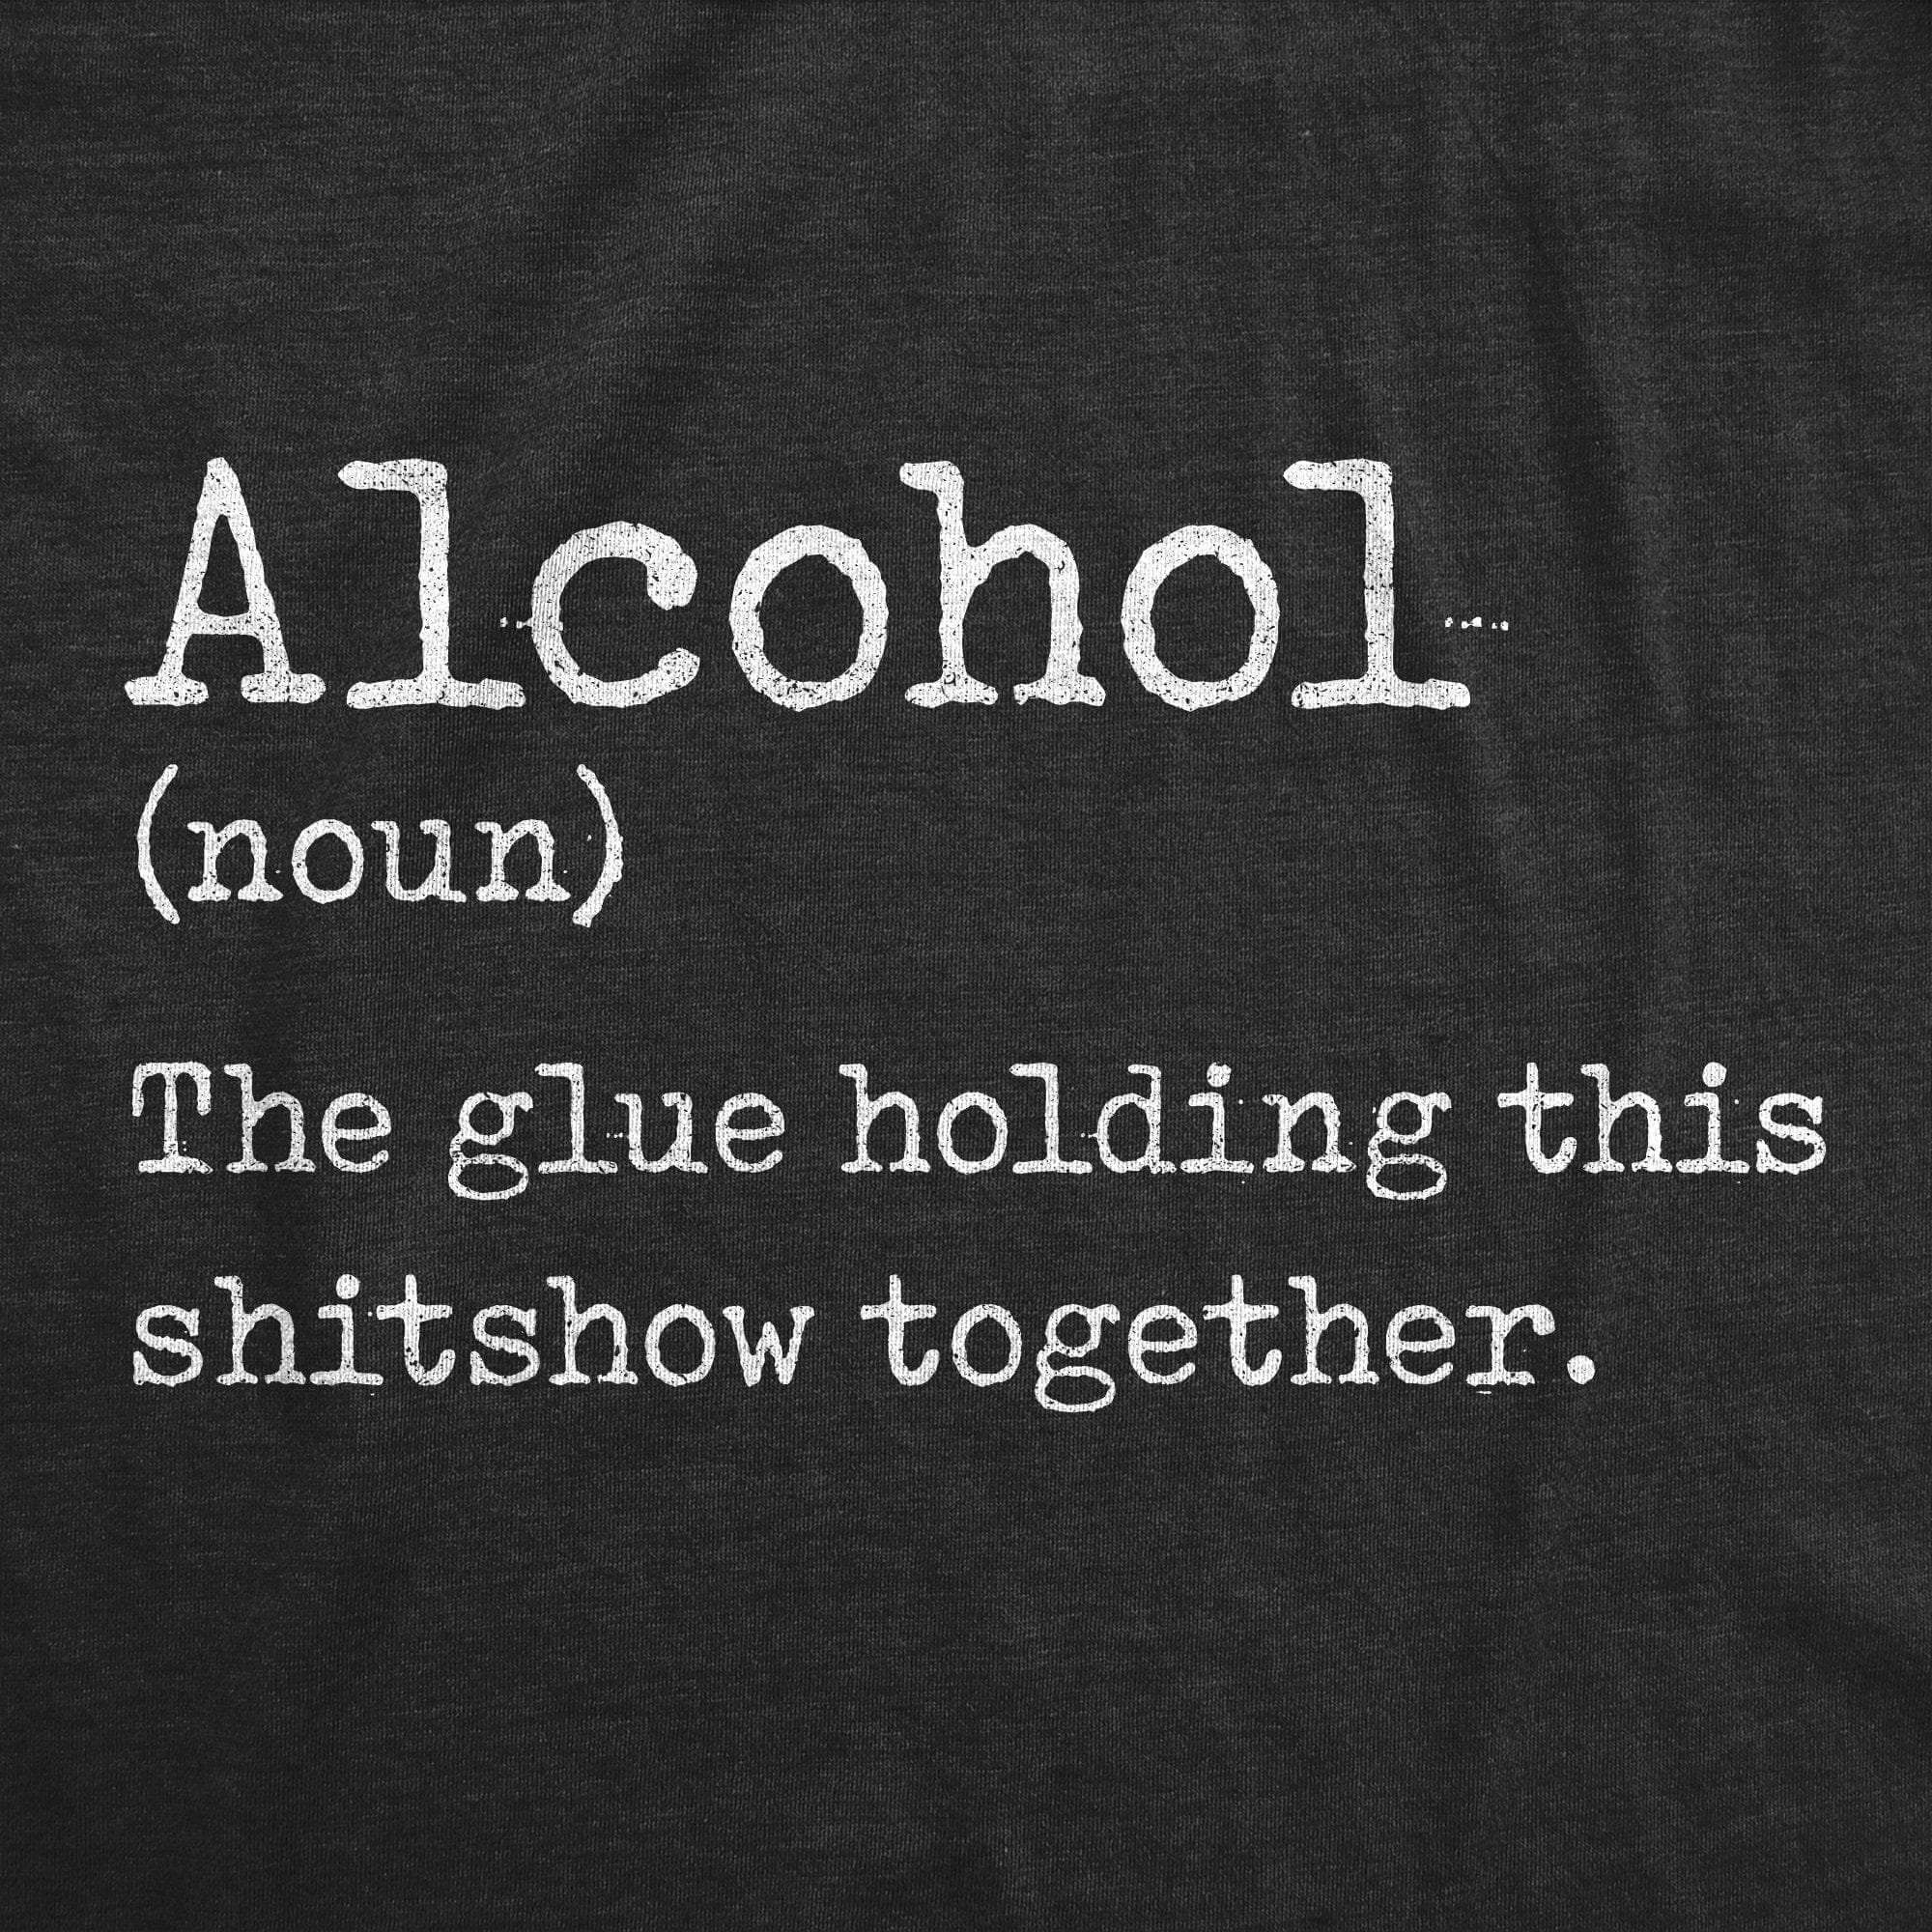 Alcohol Definition Men's Tshirt - Crazy Dog T-Shirts